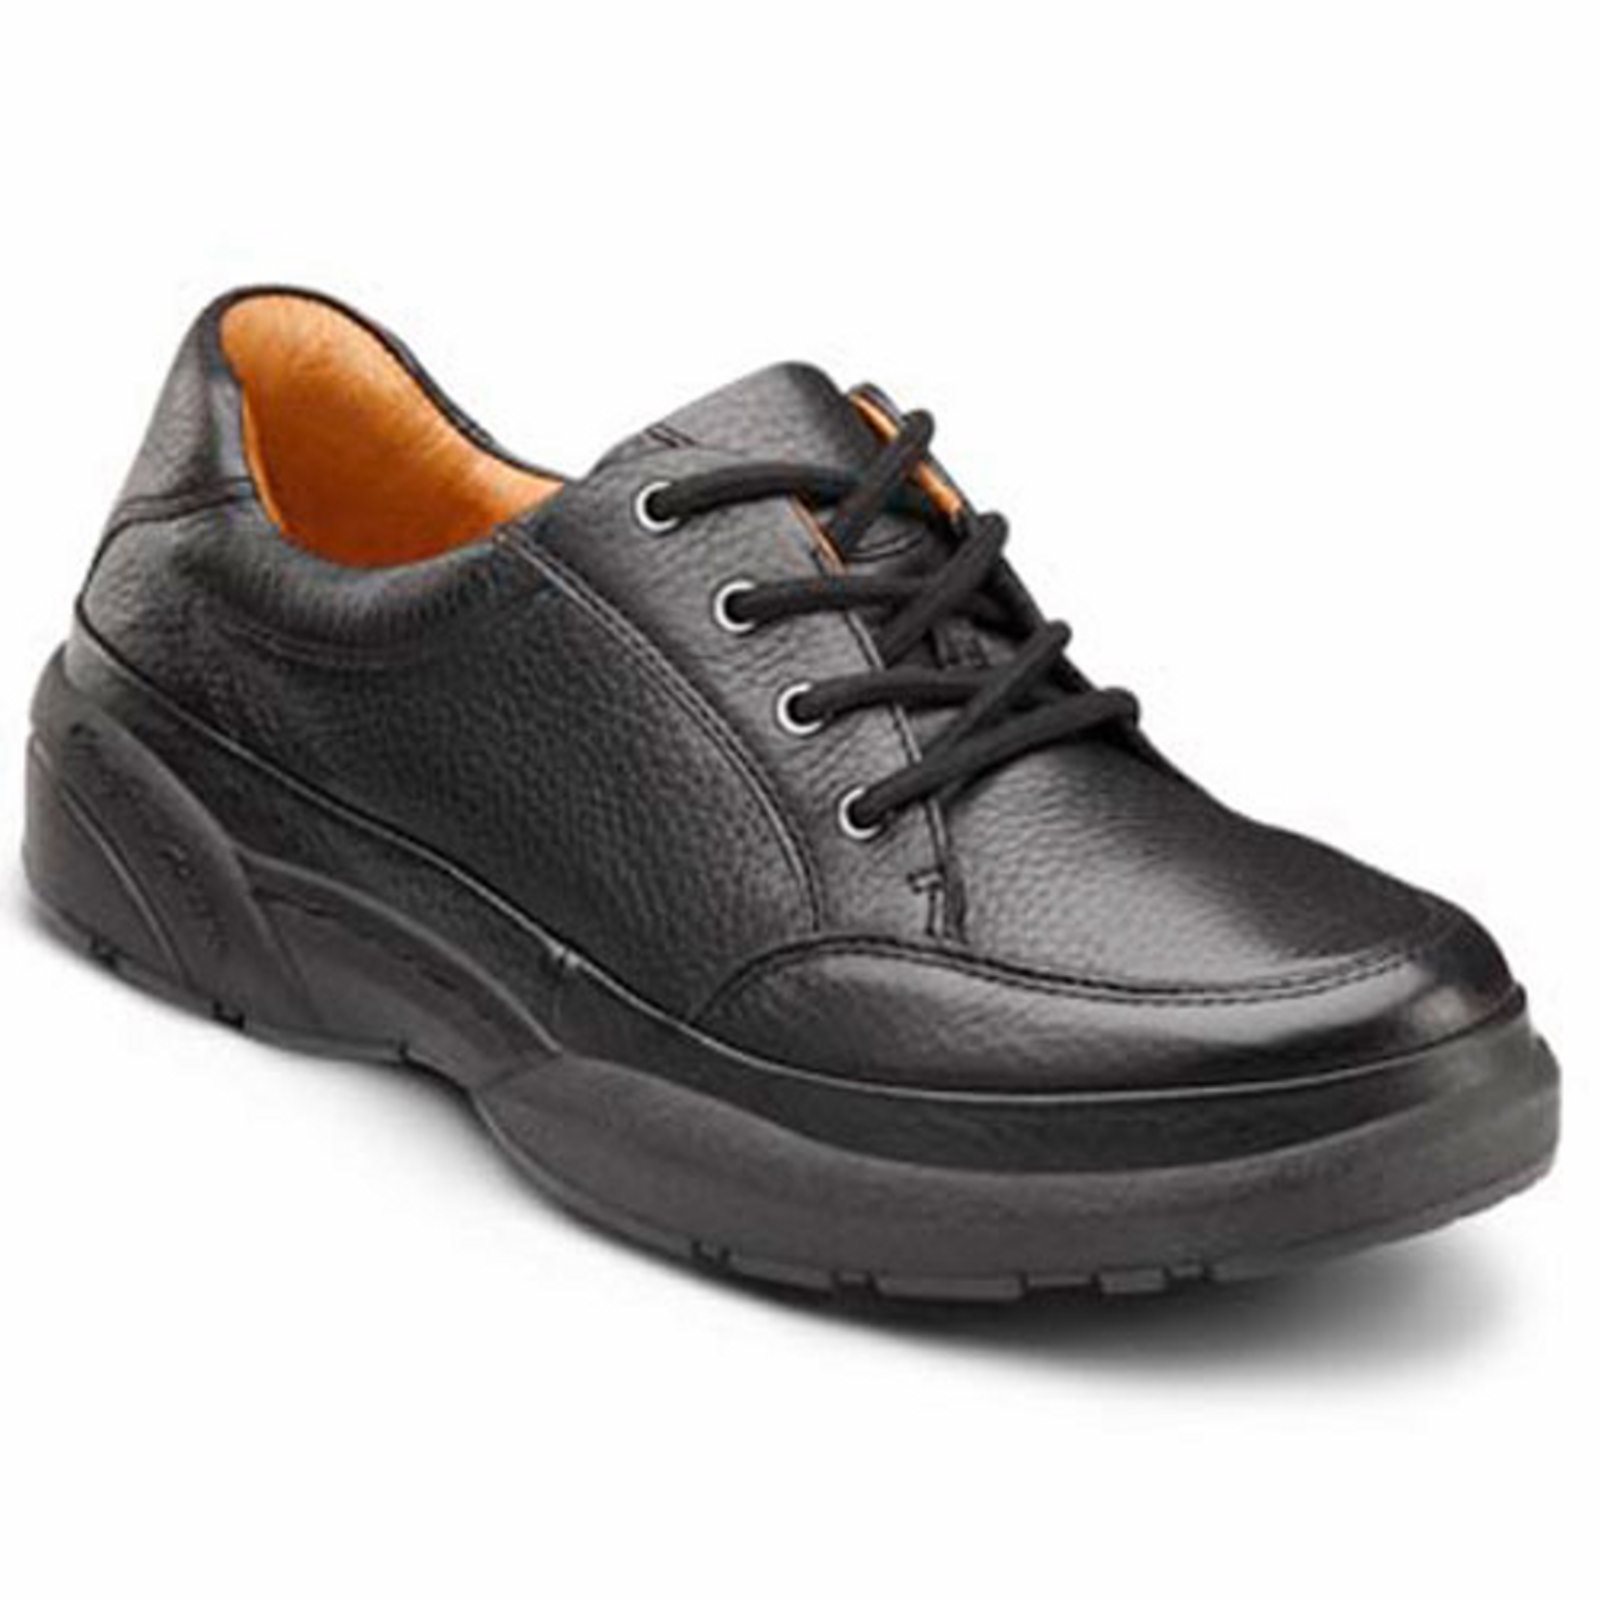 Dr. Comfort Justin Men's Casual Shoe: 9.5 Wide (E/2E) Black Lace - image 1 of 5